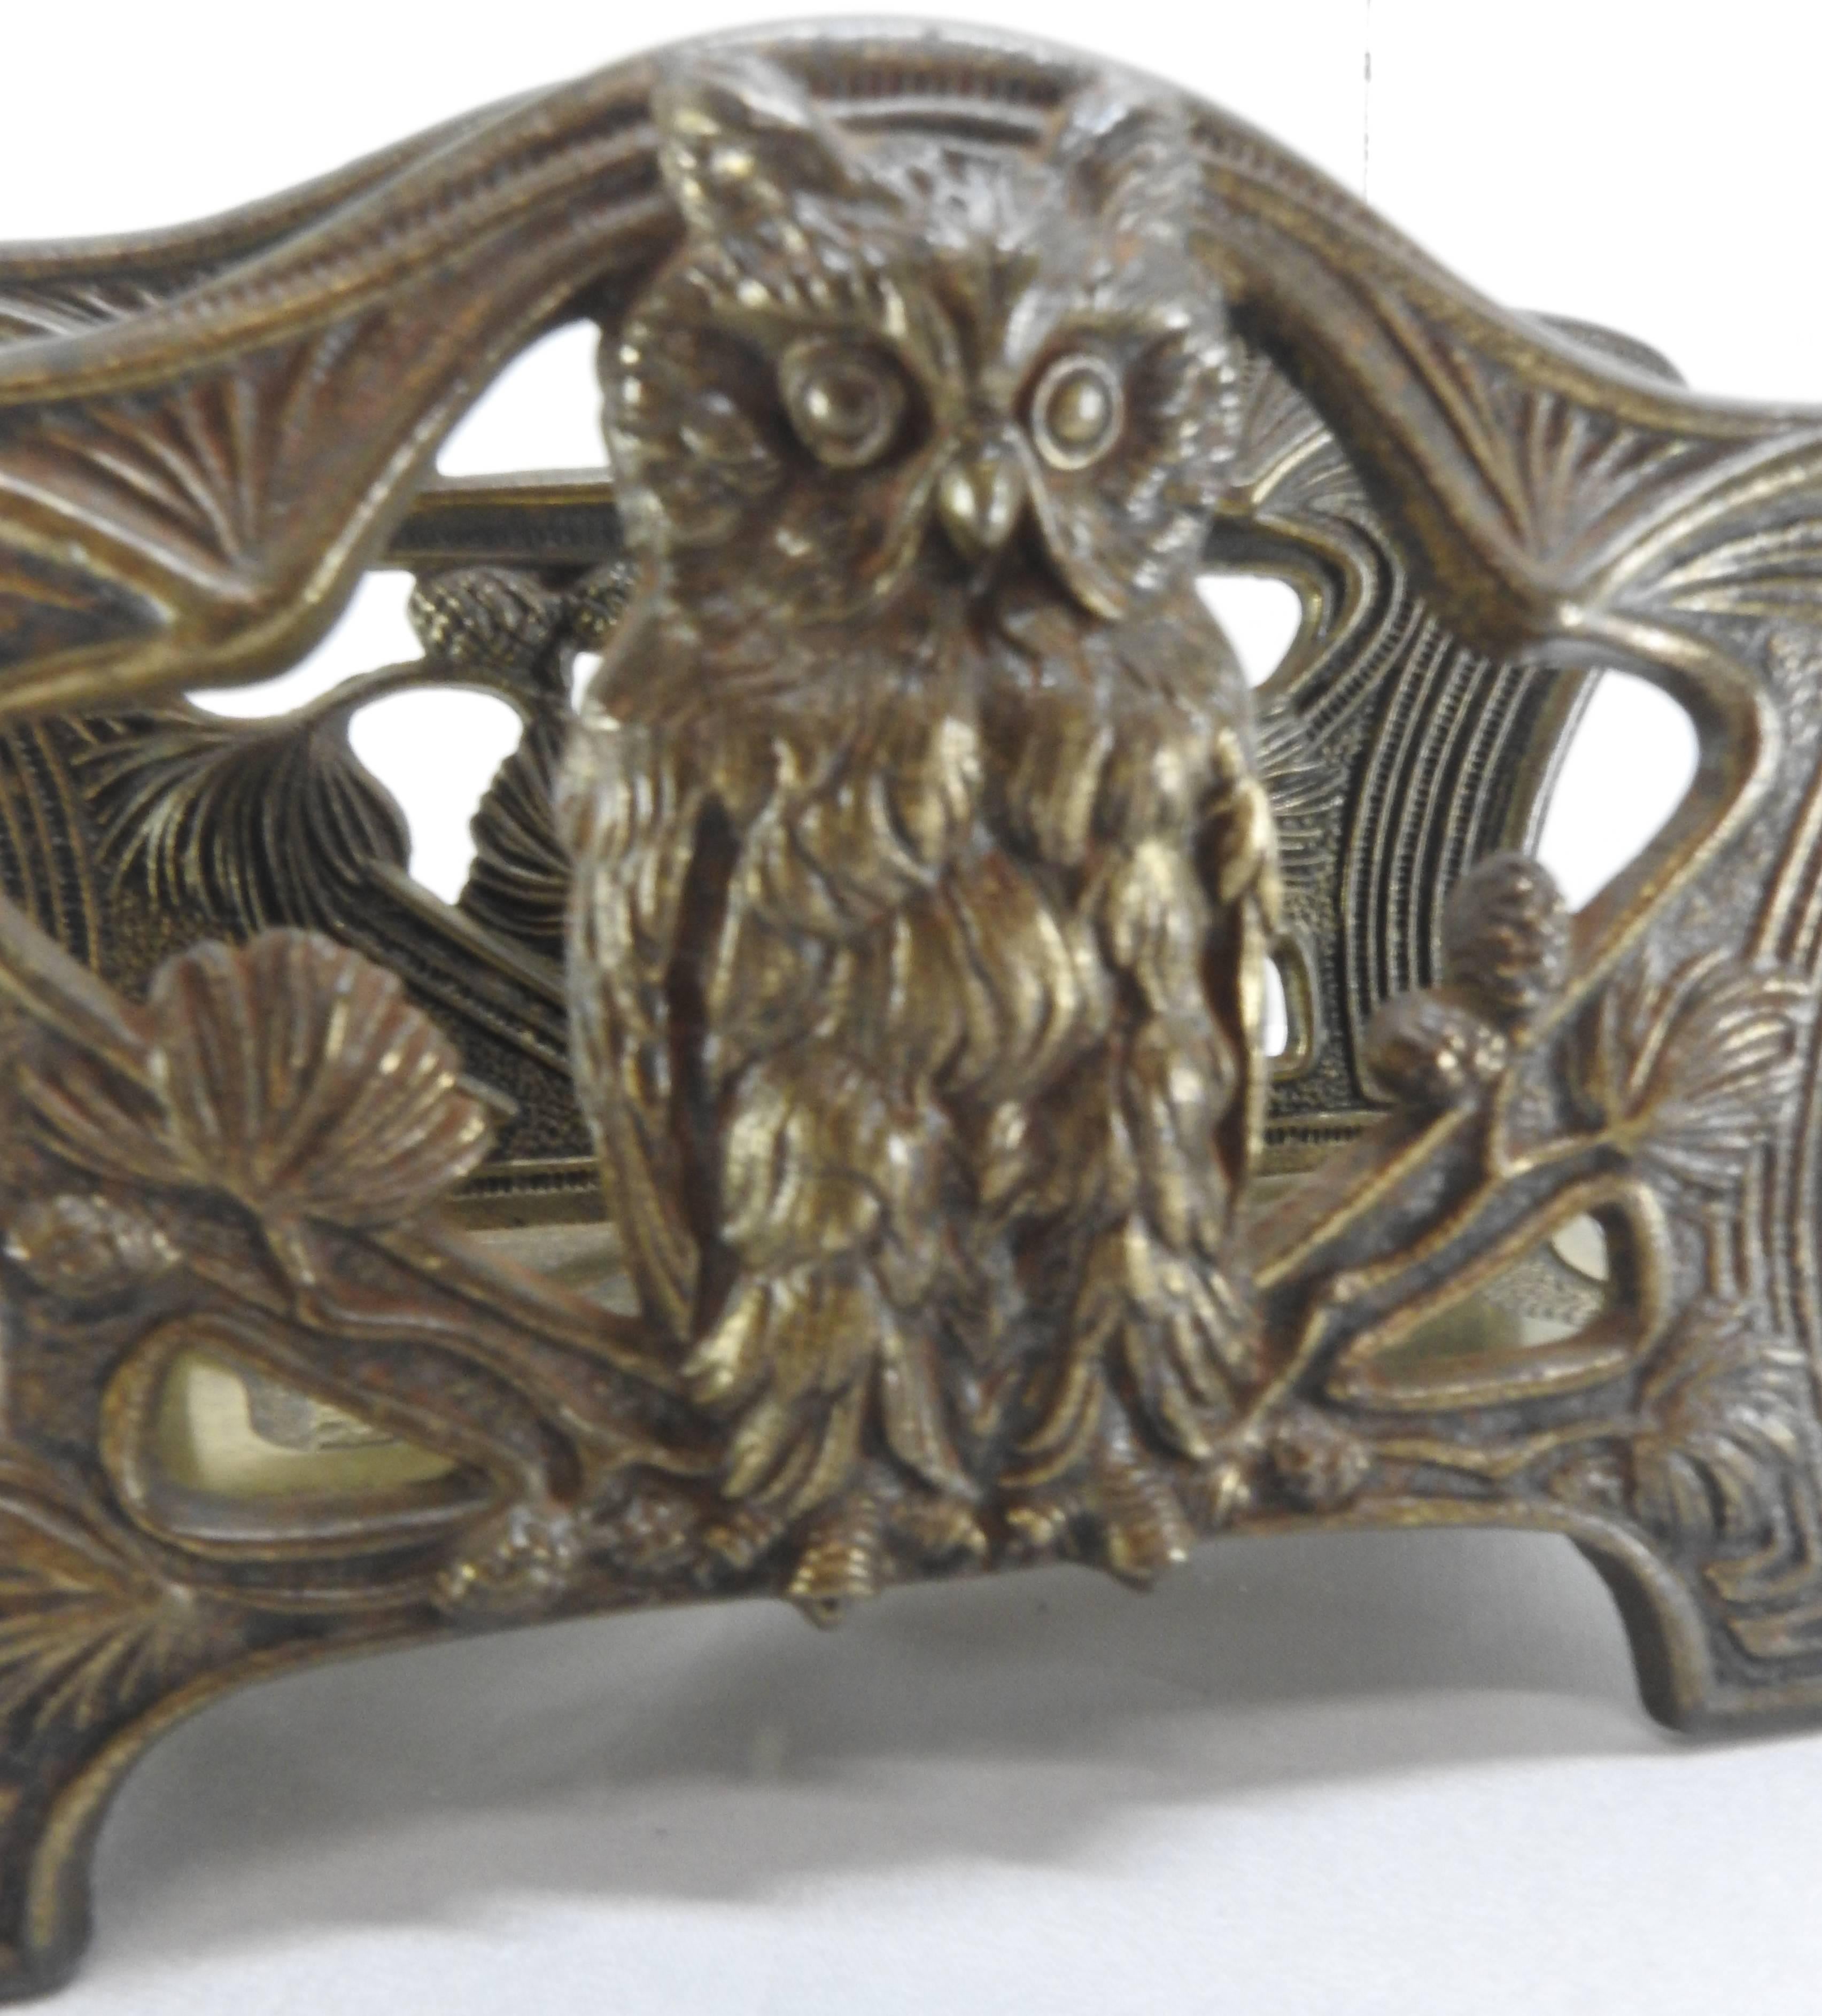 American Art Nouveau Owl Letter Napkin Holder by H. L. Judd Co